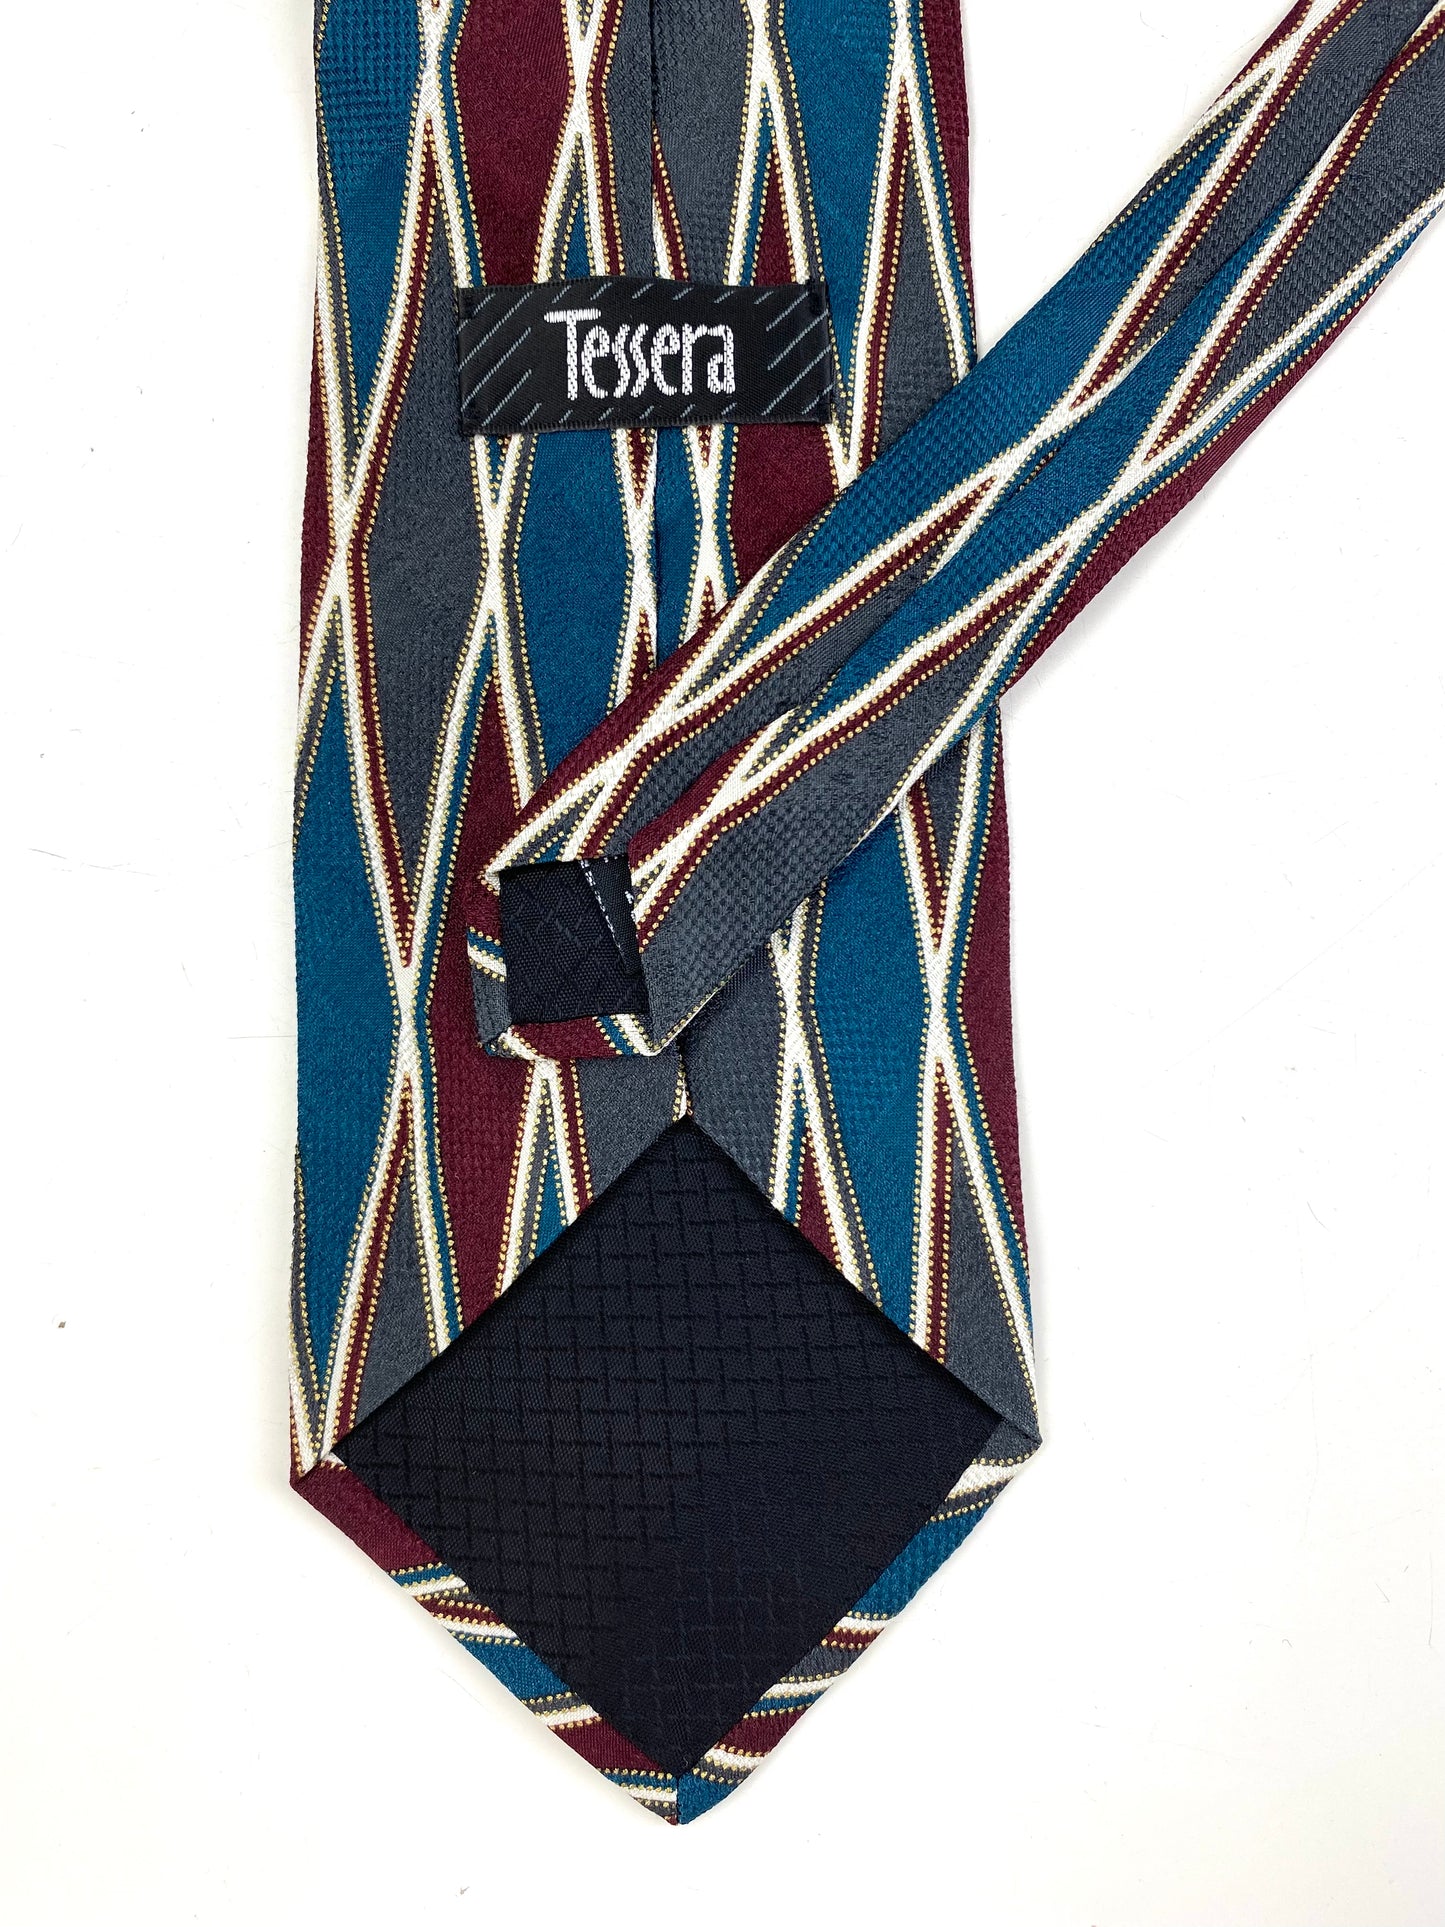 Back and labels of: 90s Deadstock Silk Necktie, Men's Vintage Teal/ Maroon/ Grey Diamond Harlequin Pattern Tie, NOS